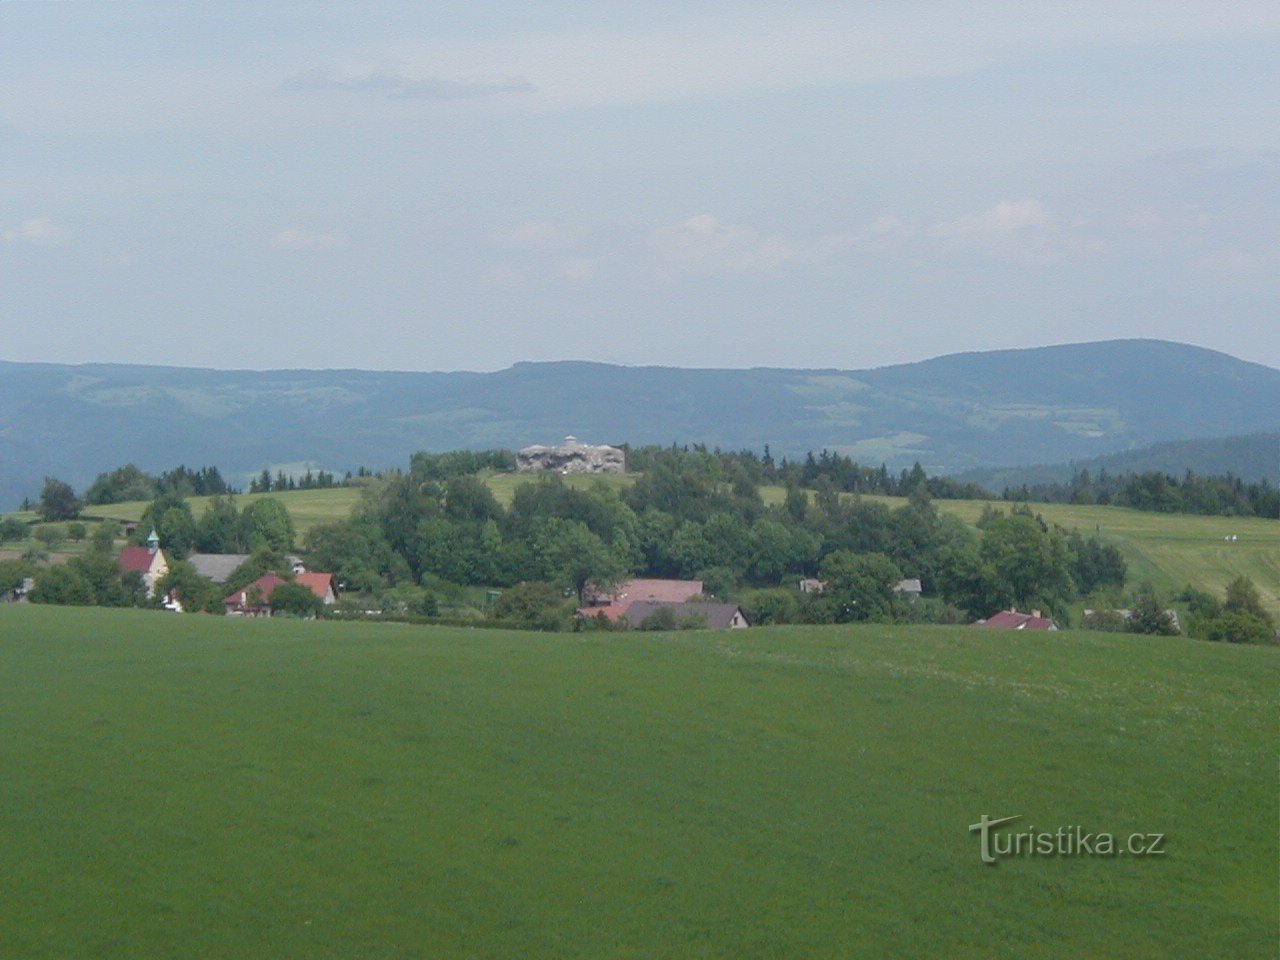 Torre de vigilancia en Dobrošov - vista hacia la fortaleza de Můstek